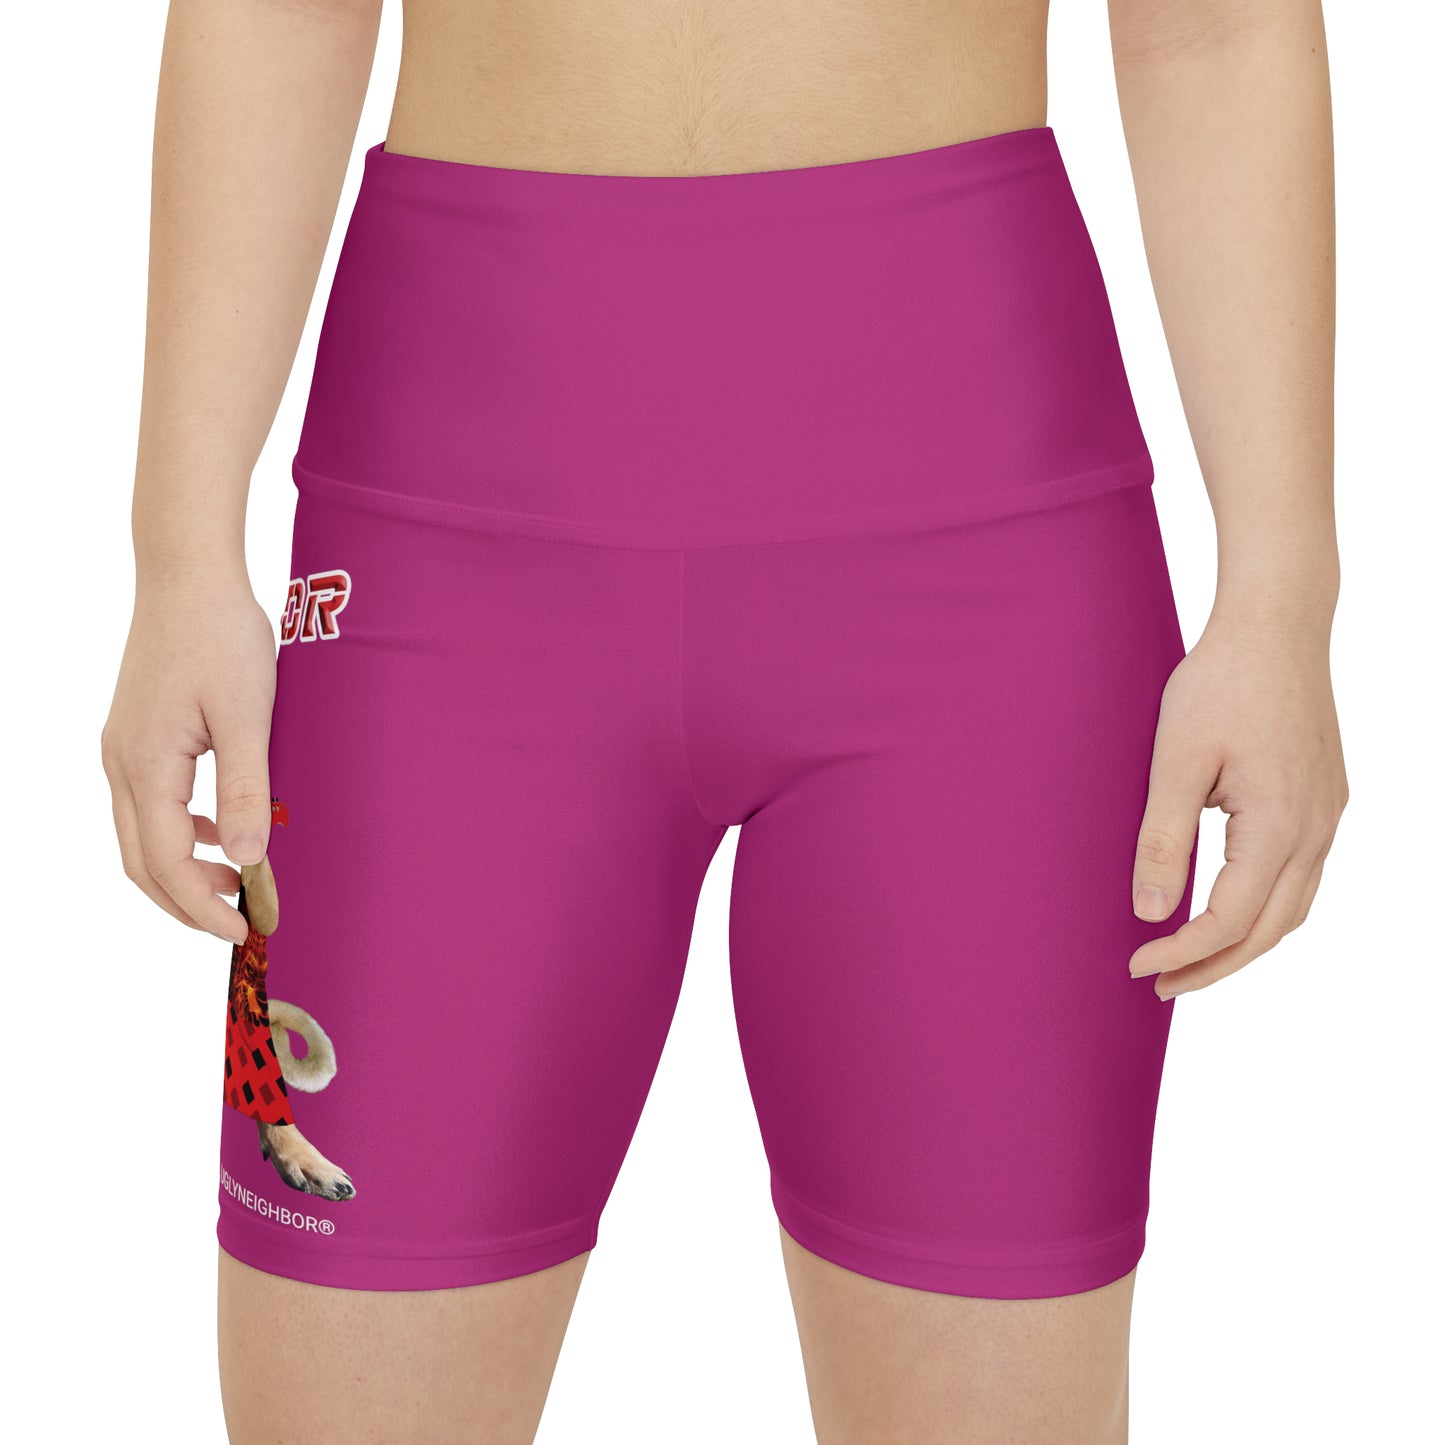 Ugly Neighbor II Women's Workout Shorts - Pink